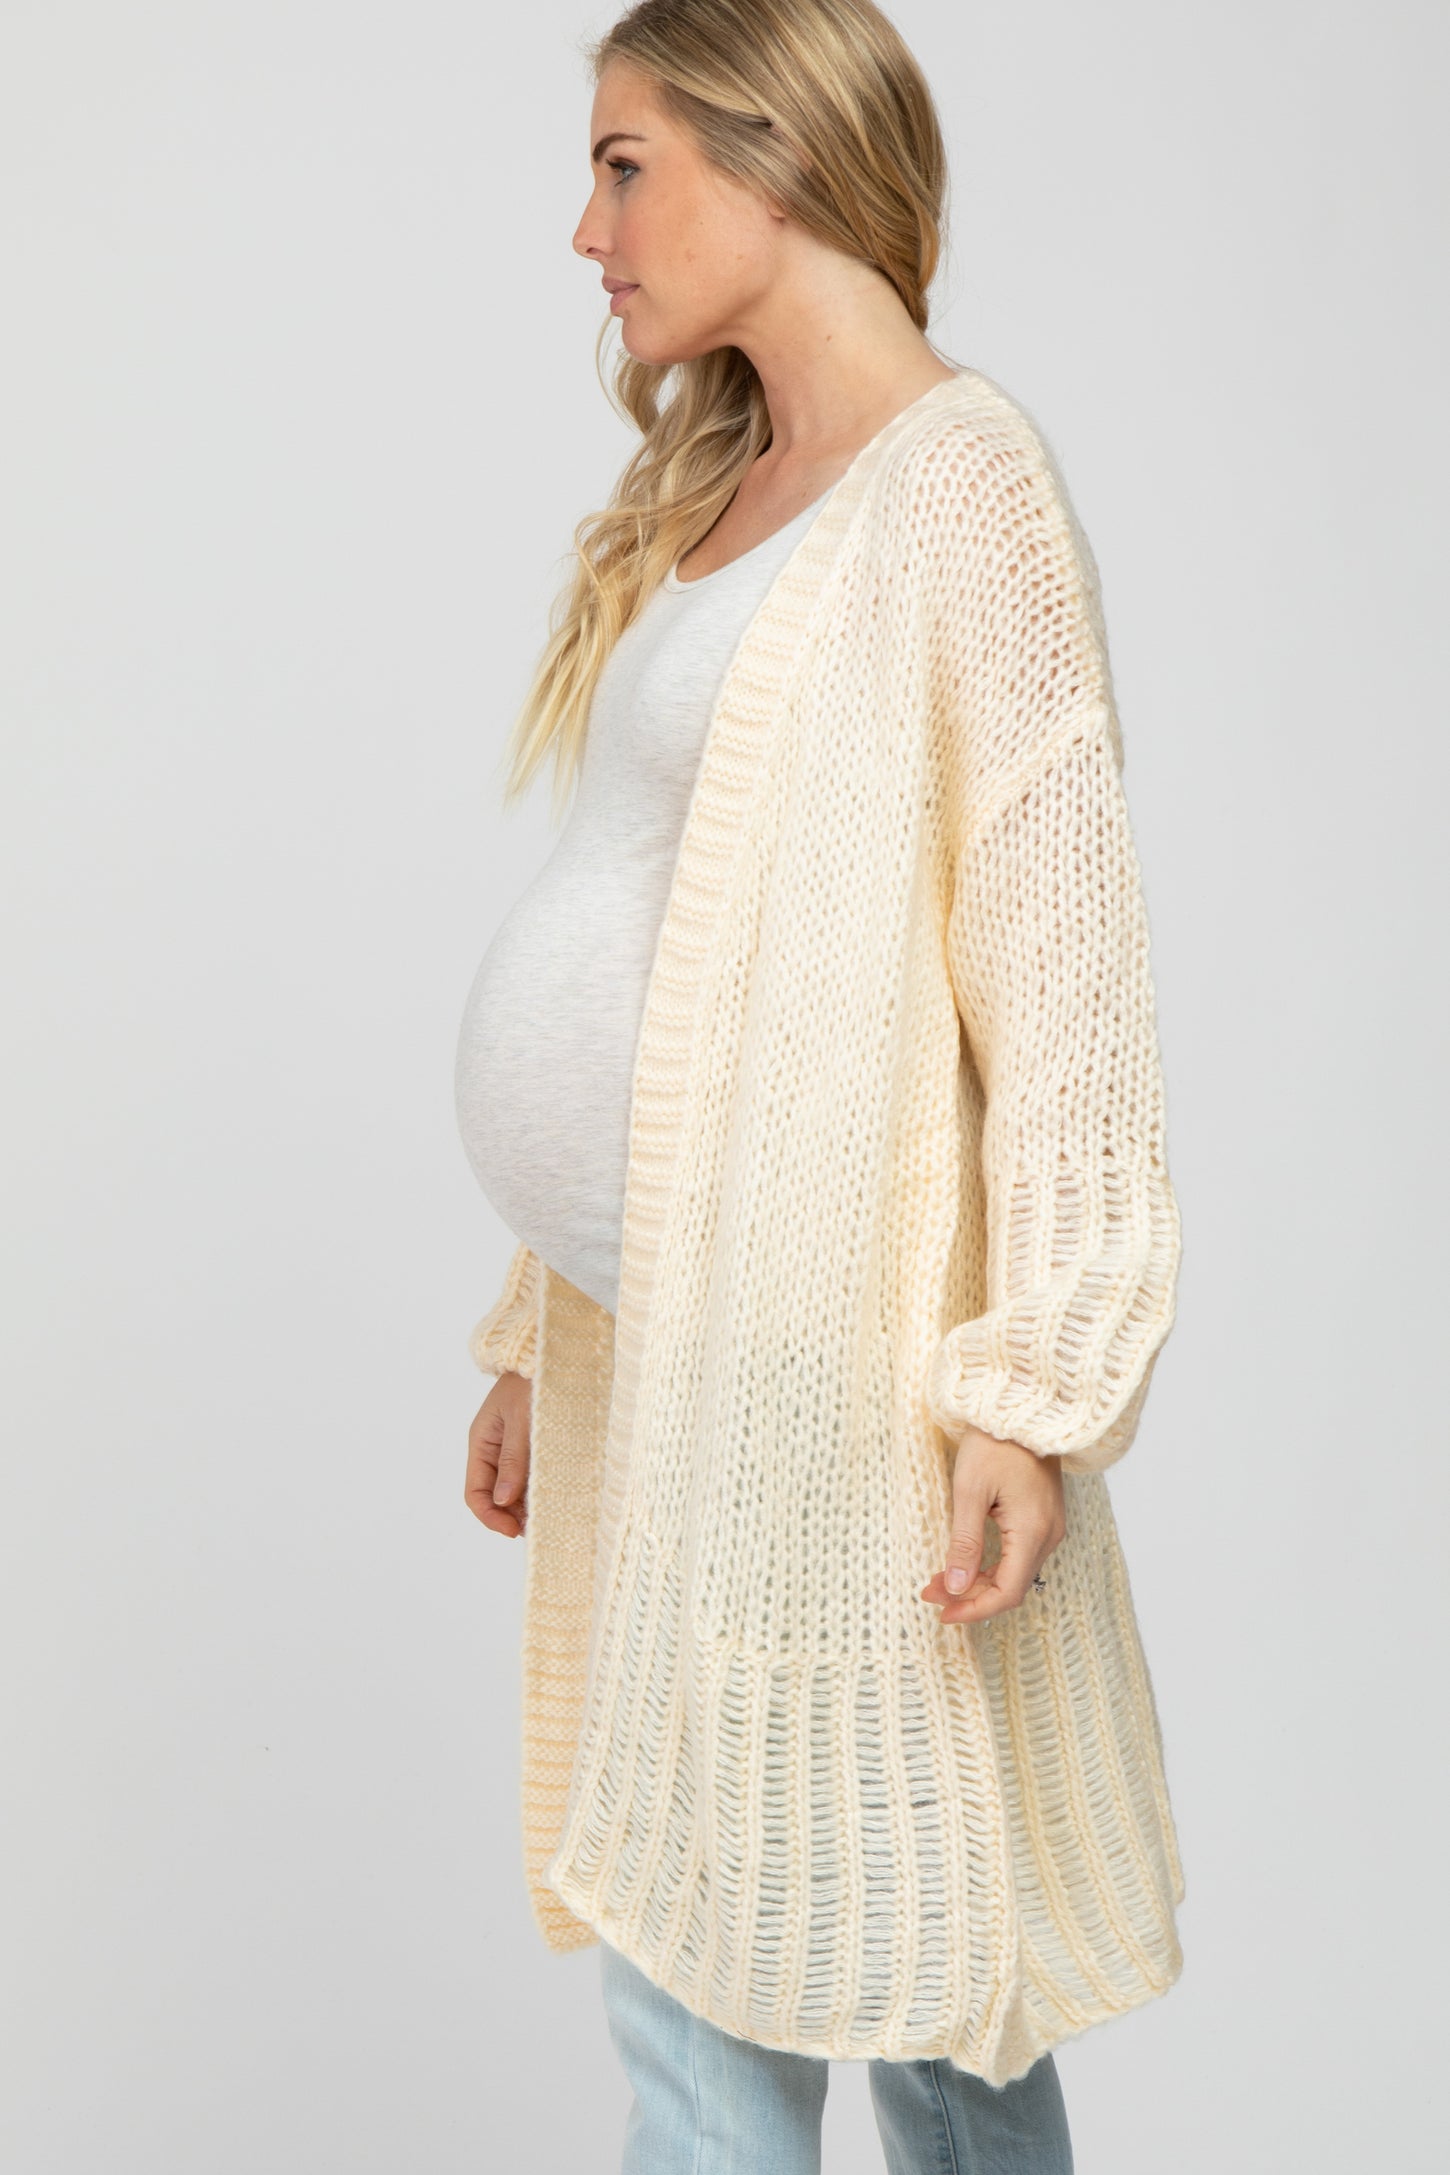 Cream Open Knit Maternity Cardigan Sweater